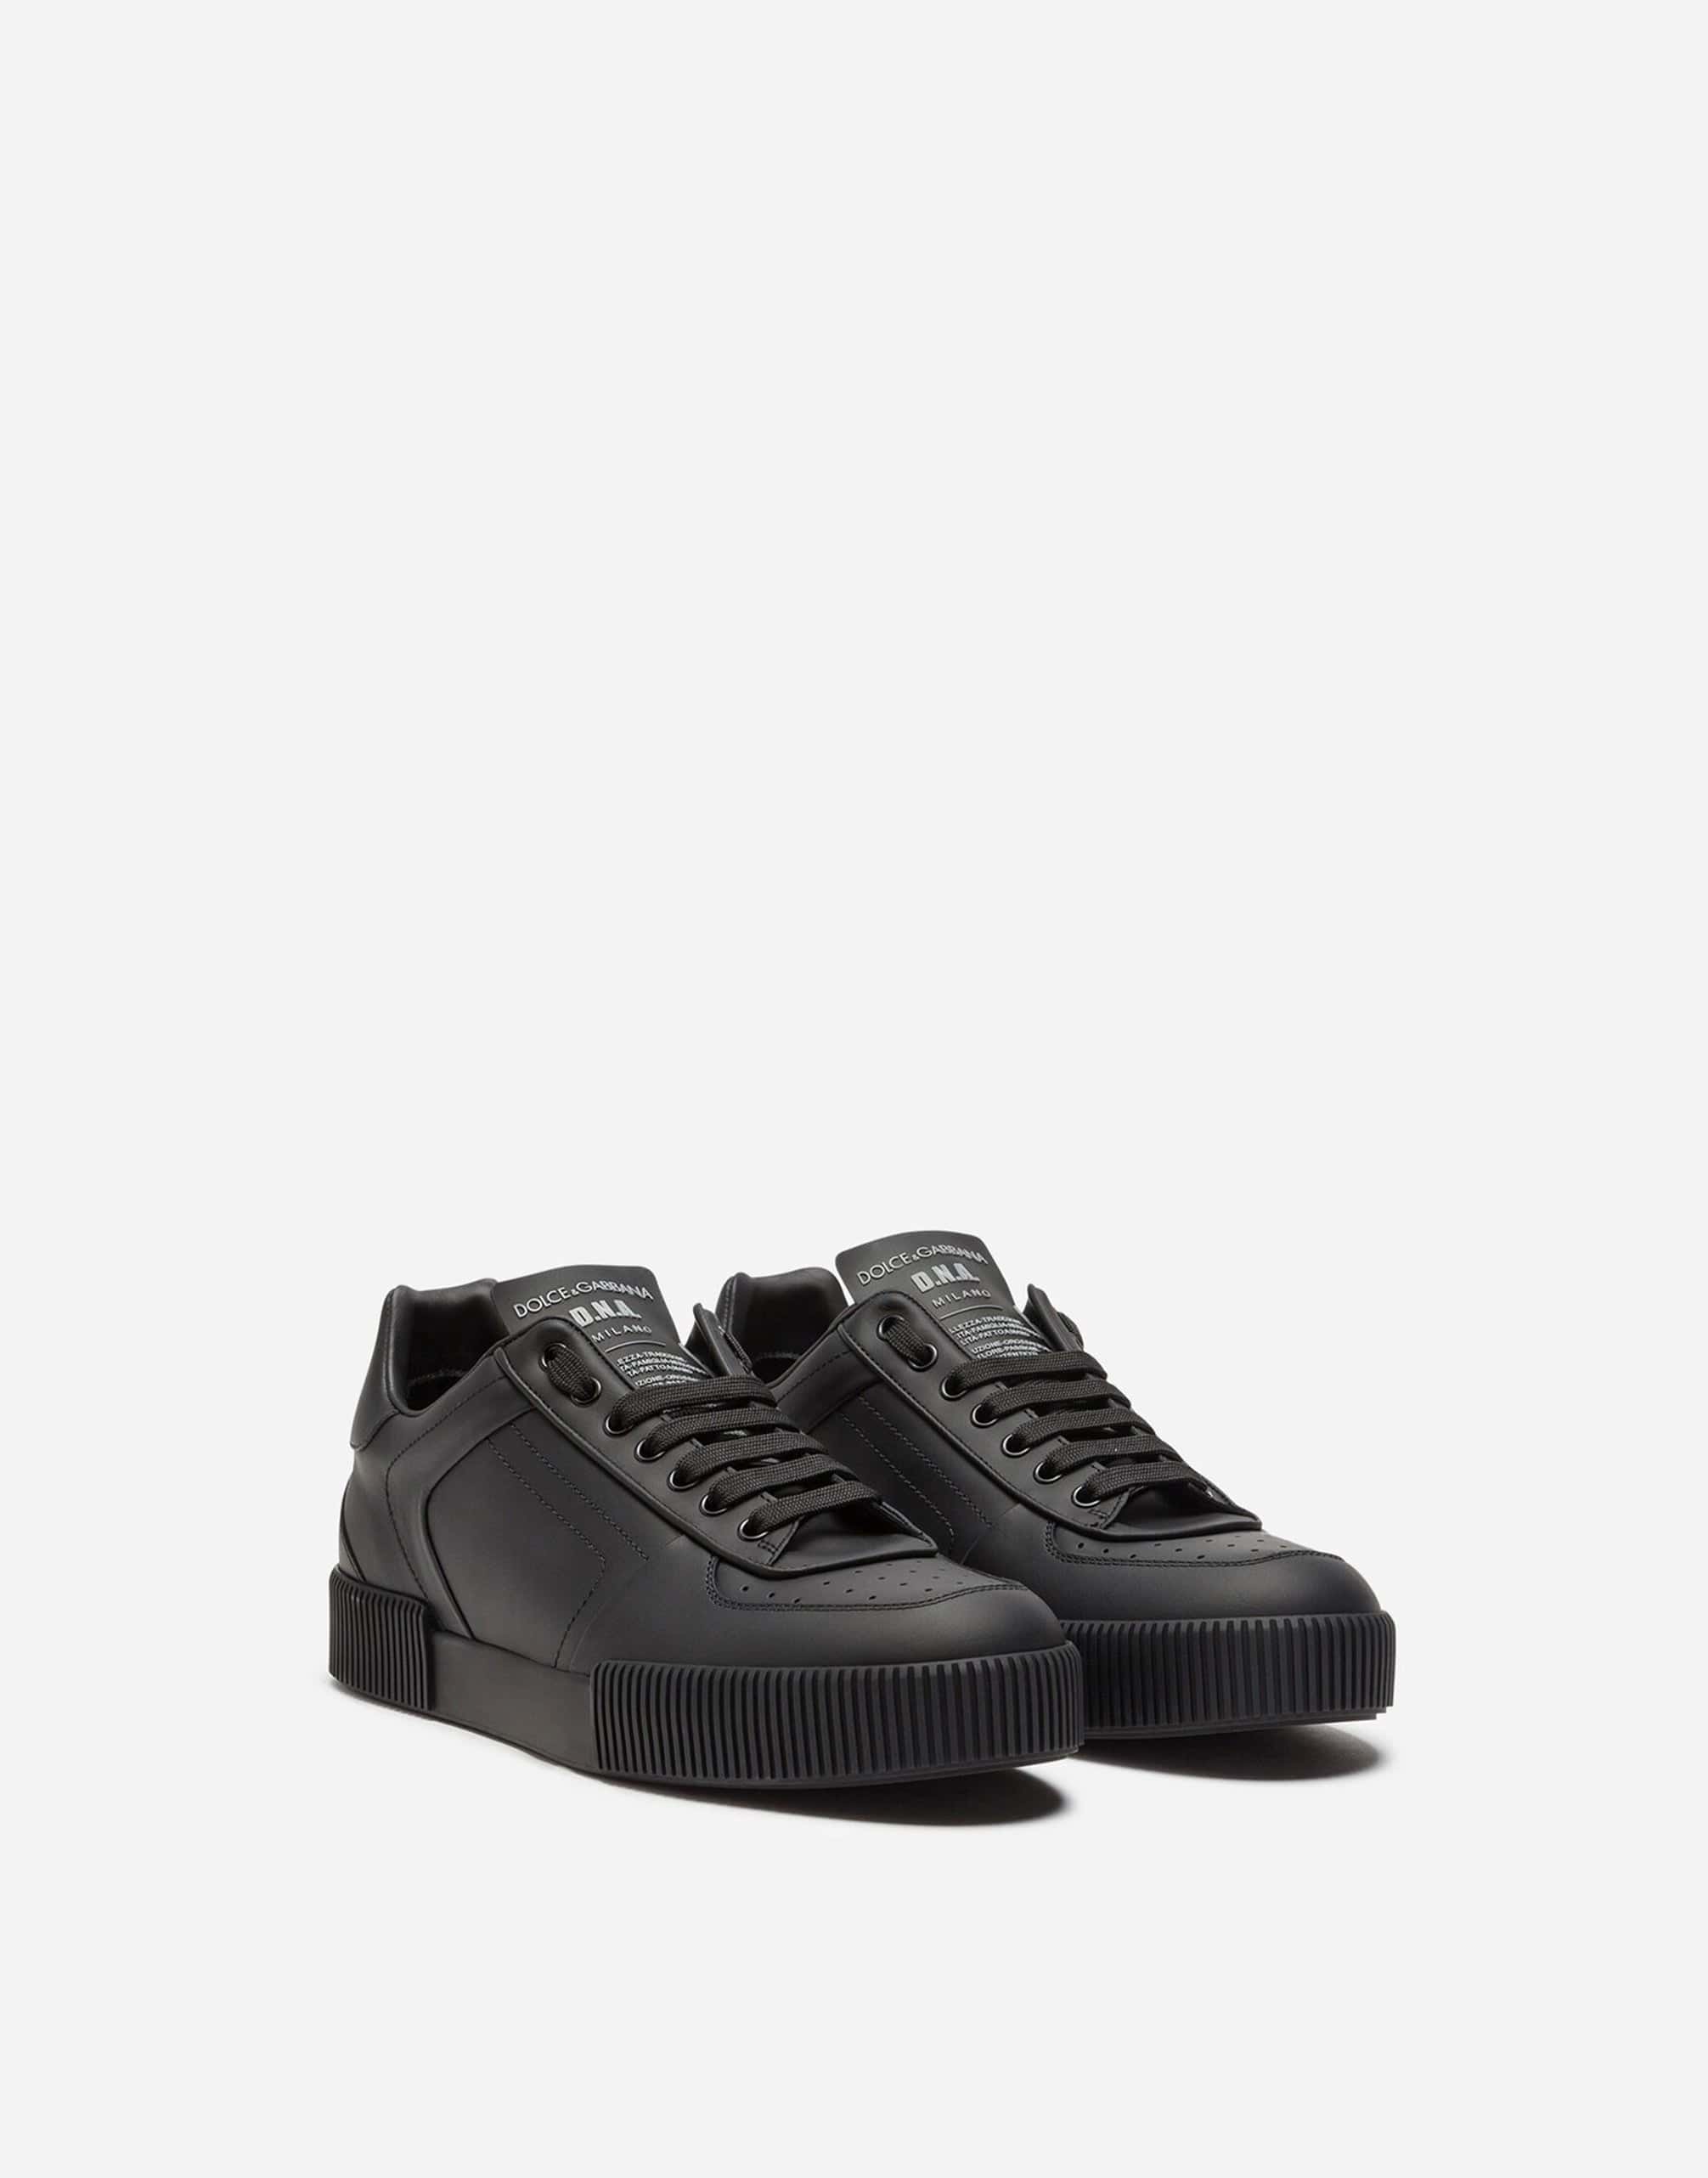 Dolce & Gabbana Miami Leather Sneakers